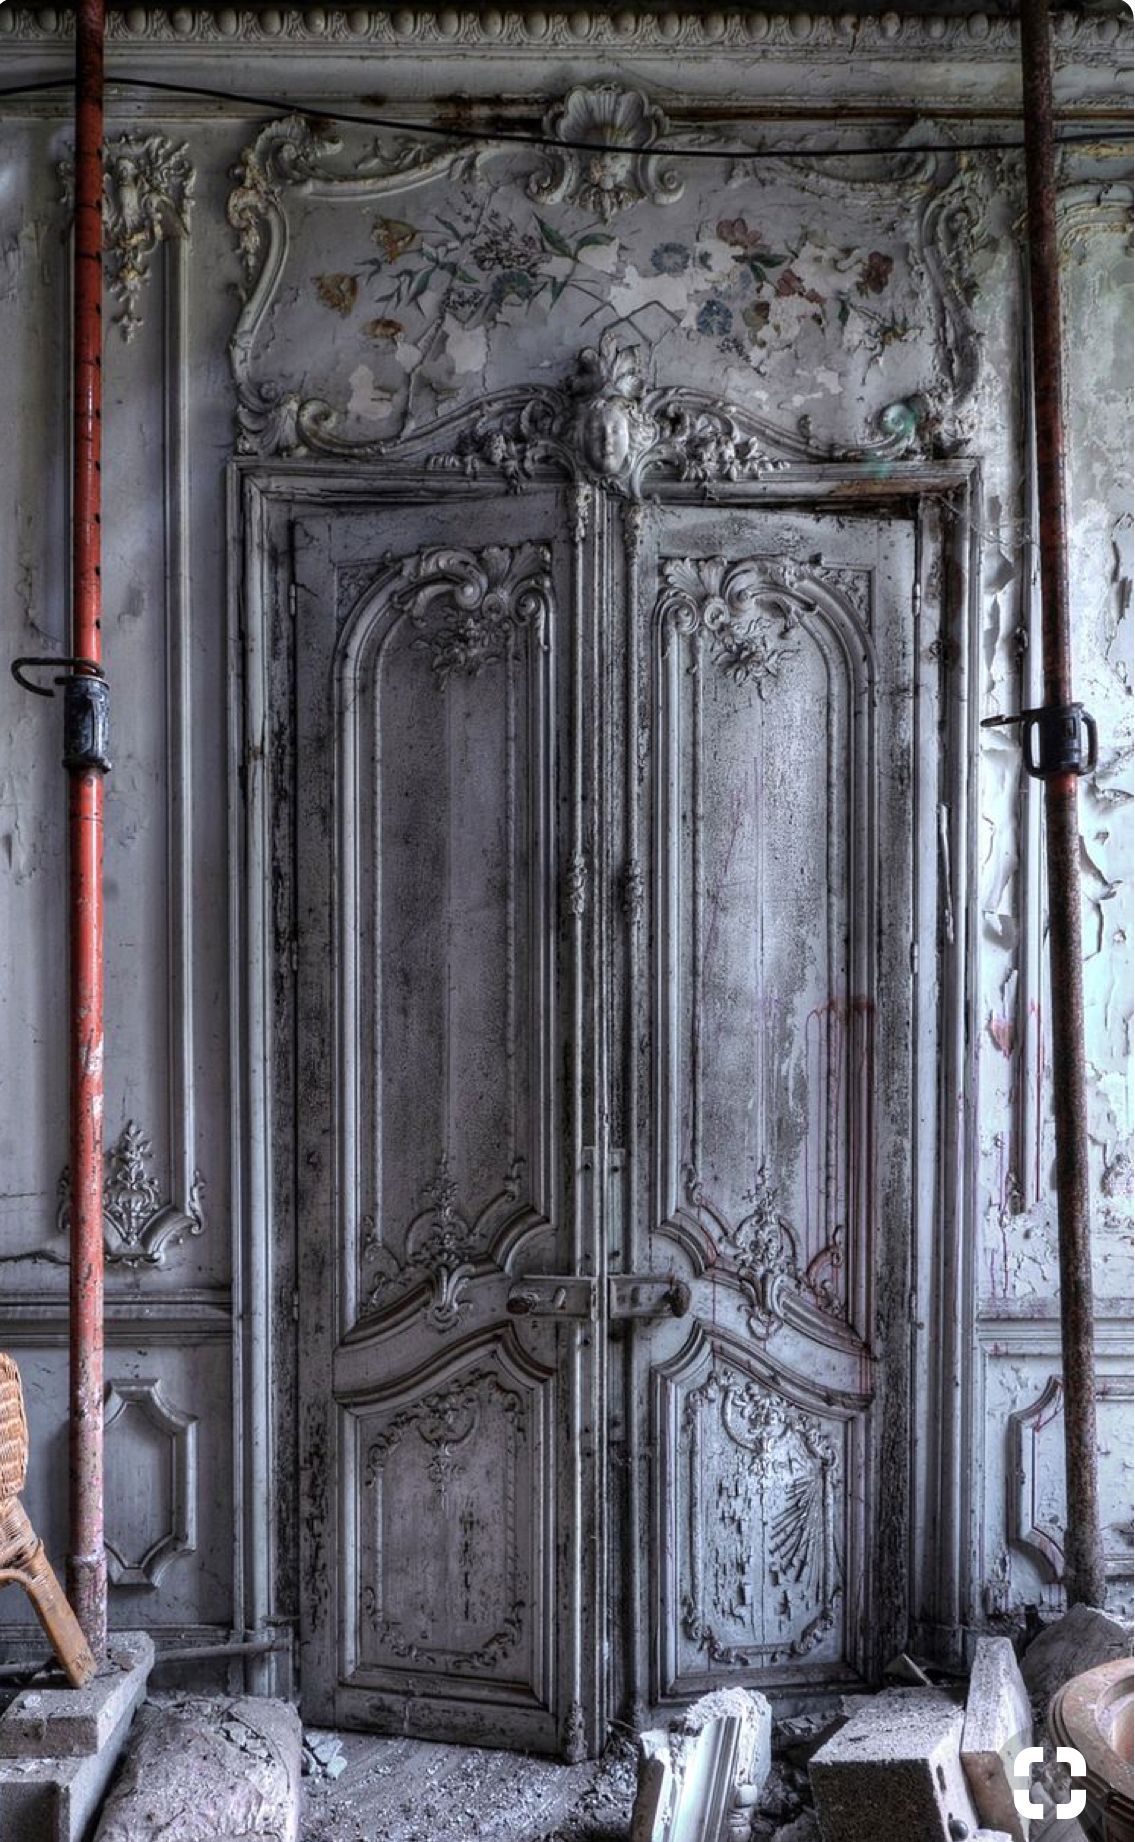 Pin by Sara Waterbury on Abandoned | Pinterest | Doors, Abandoned ...